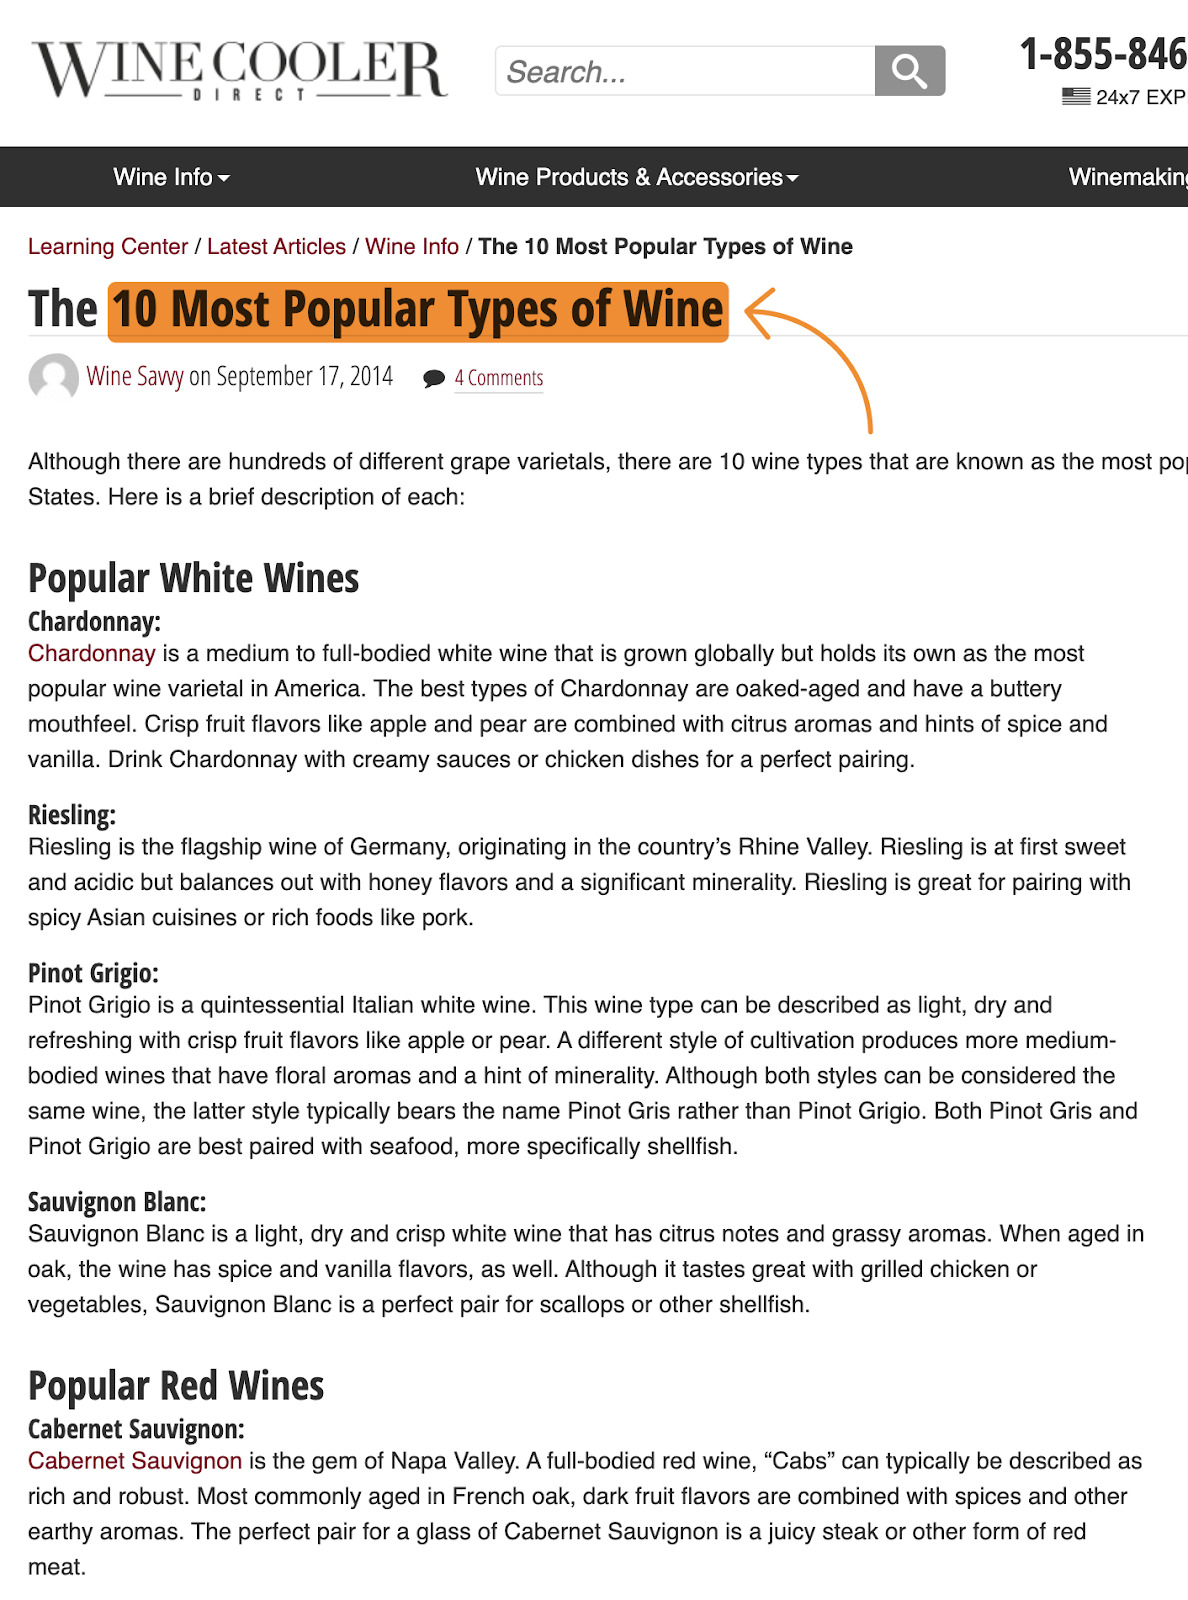 12 most popular types of wine